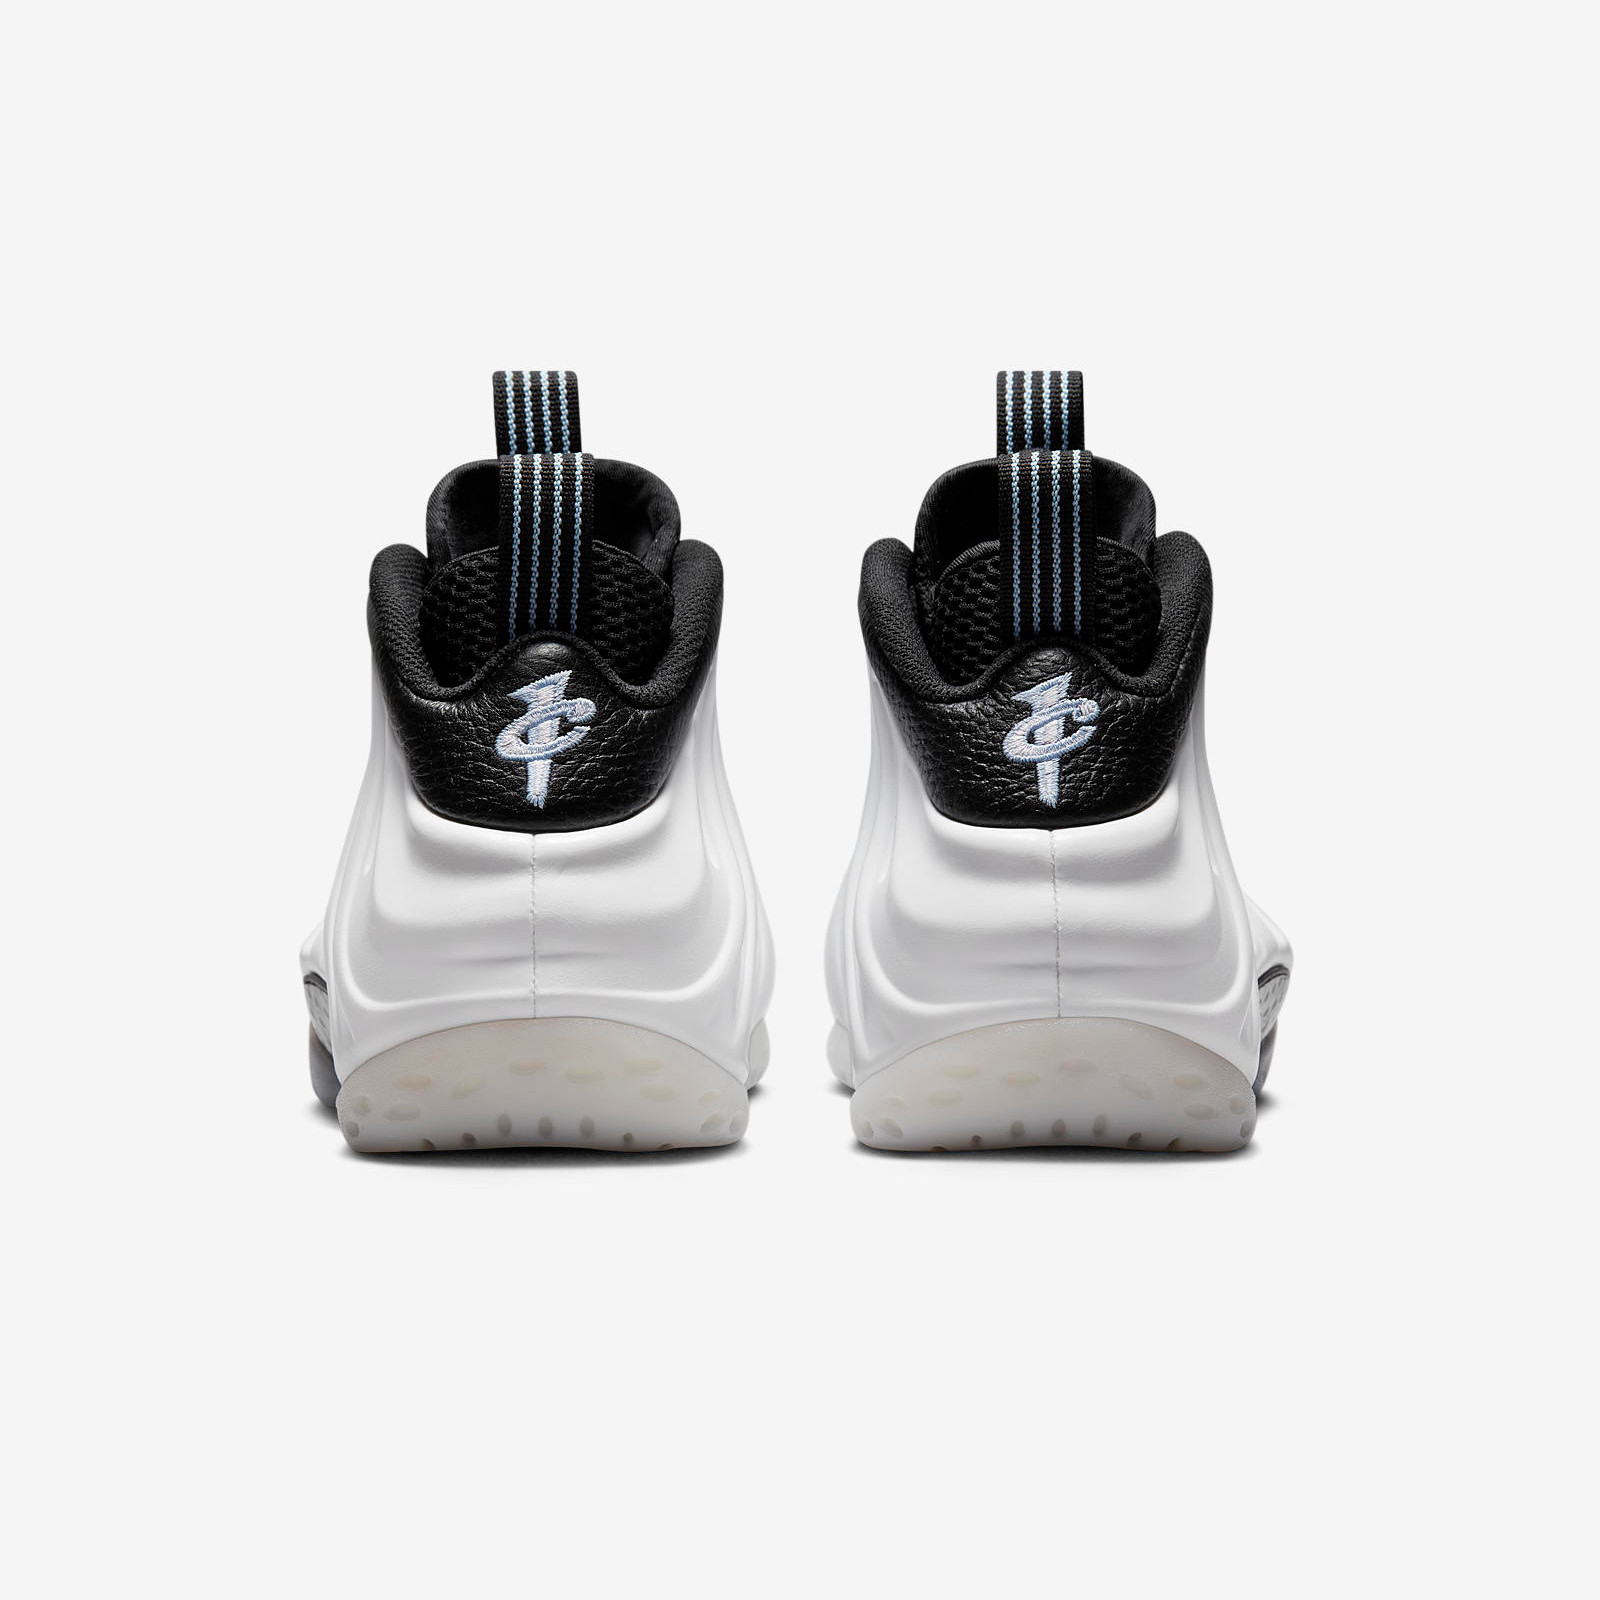 Nike Air Foamposite One
White / Black